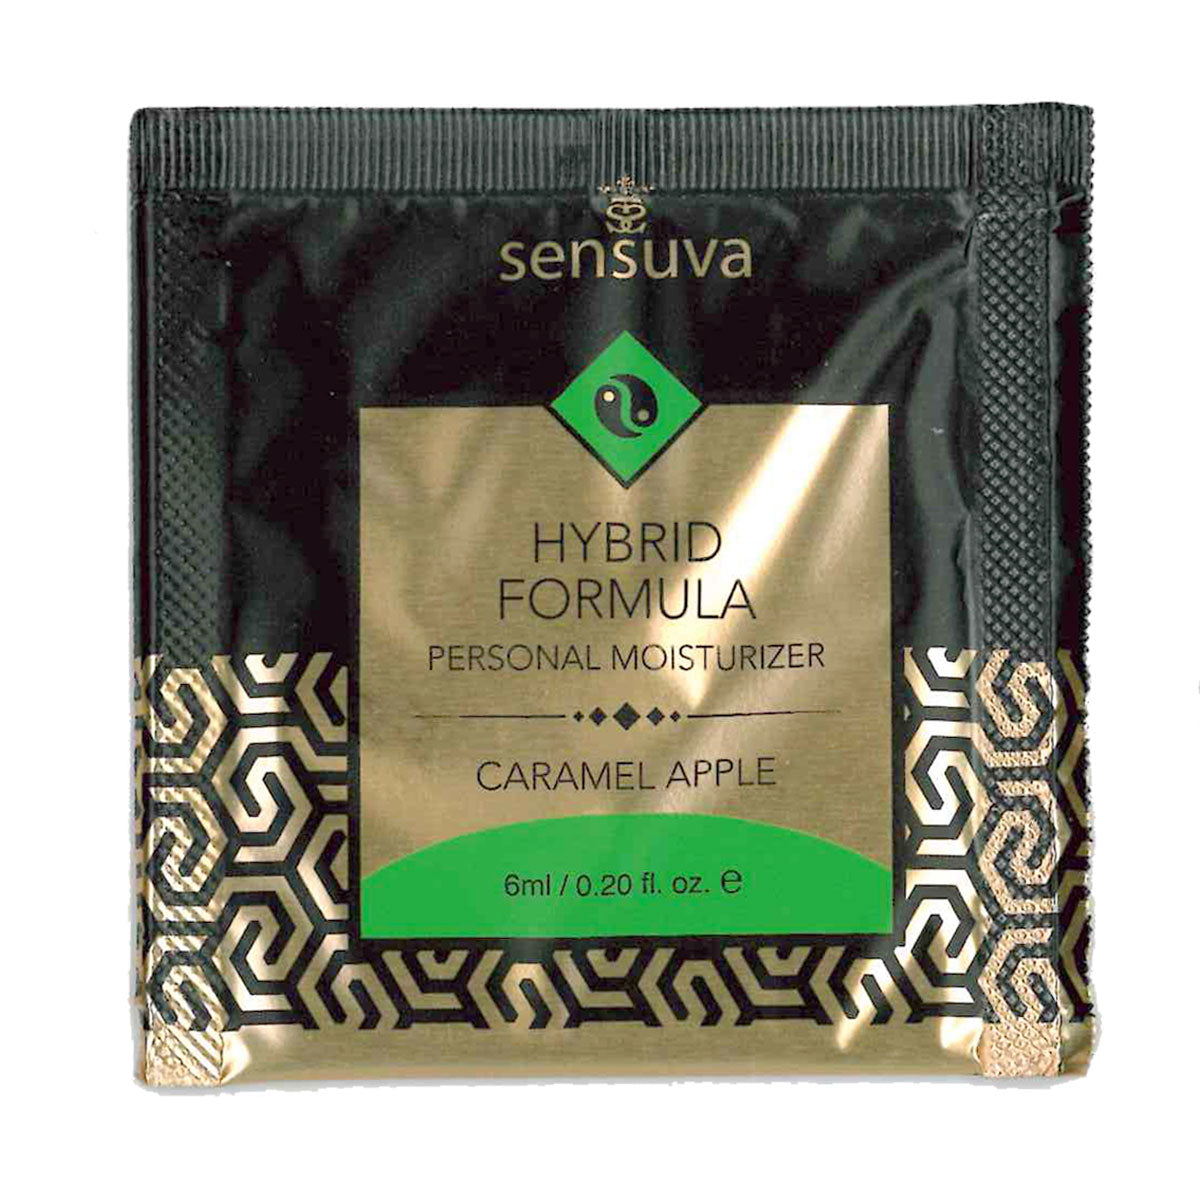 Sensuva – Hybrid Formula Personal Moisturizer - Caramel Apple - Foil 6ml/0.20 fl oz.